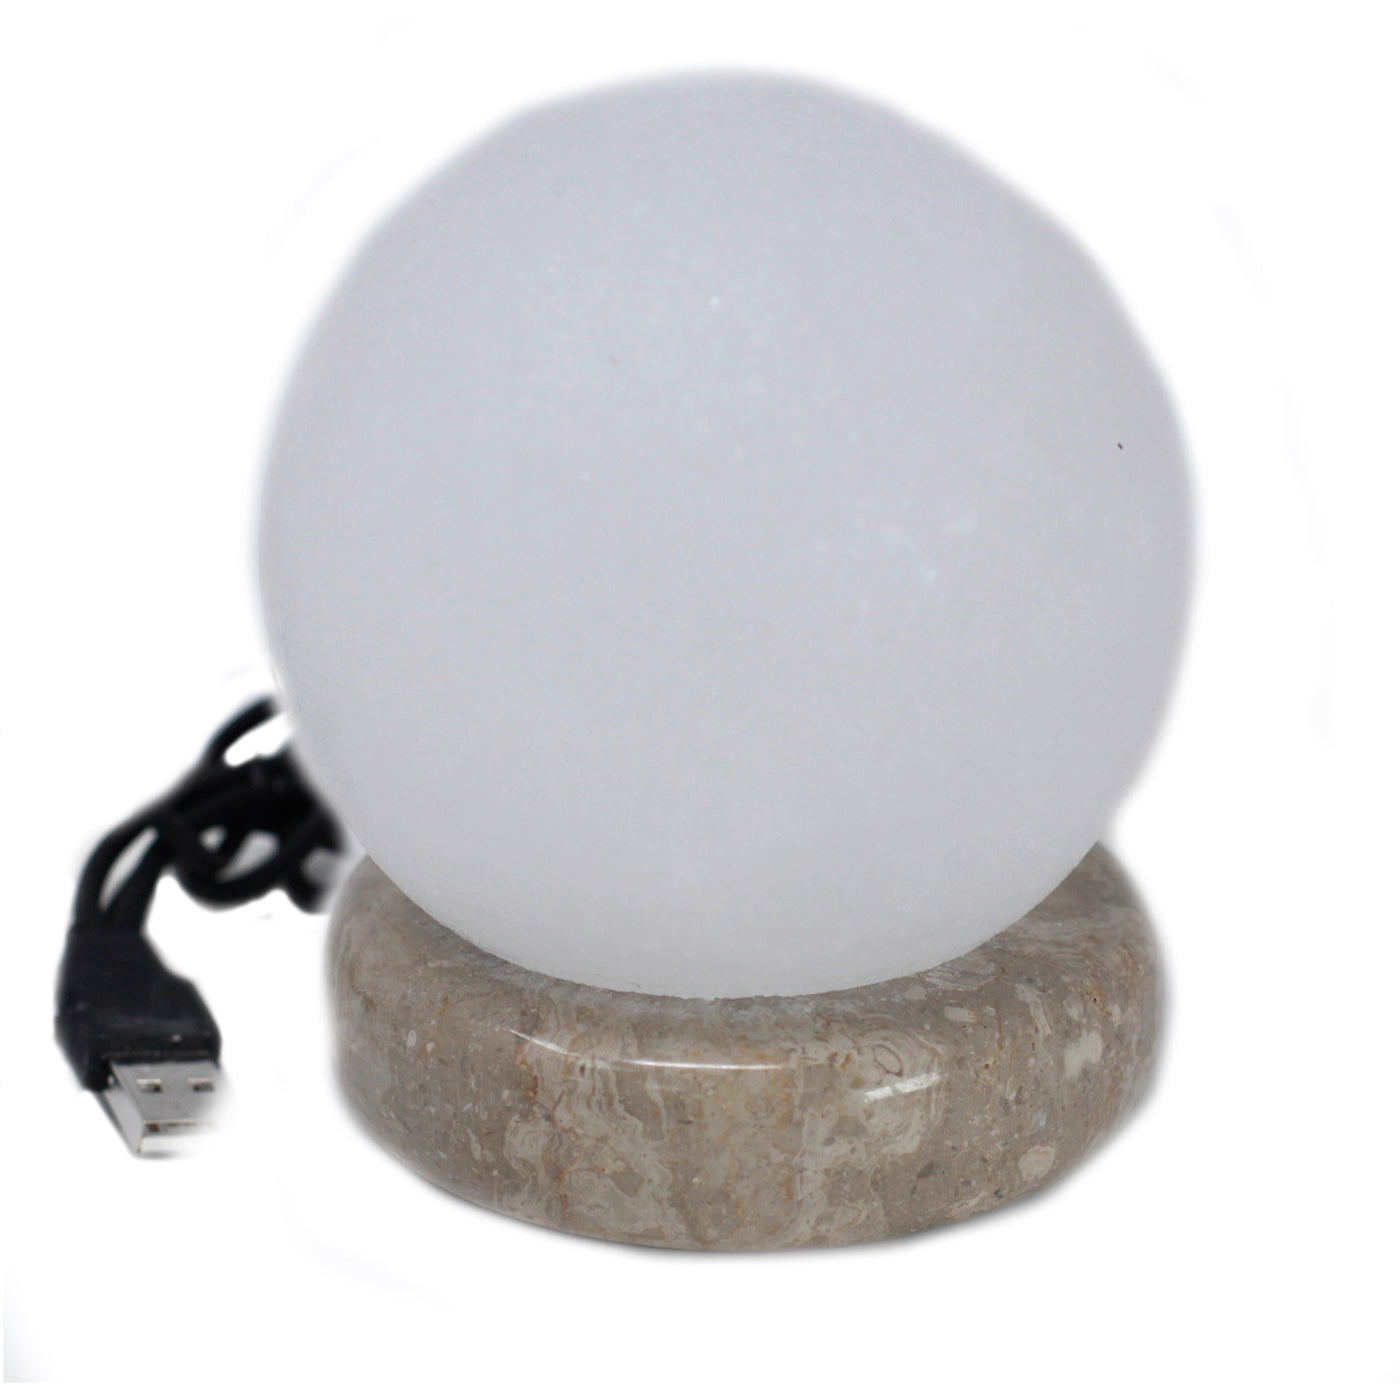 Small USB Colour Changing Round Ball White Salt Lamp - 9cm.